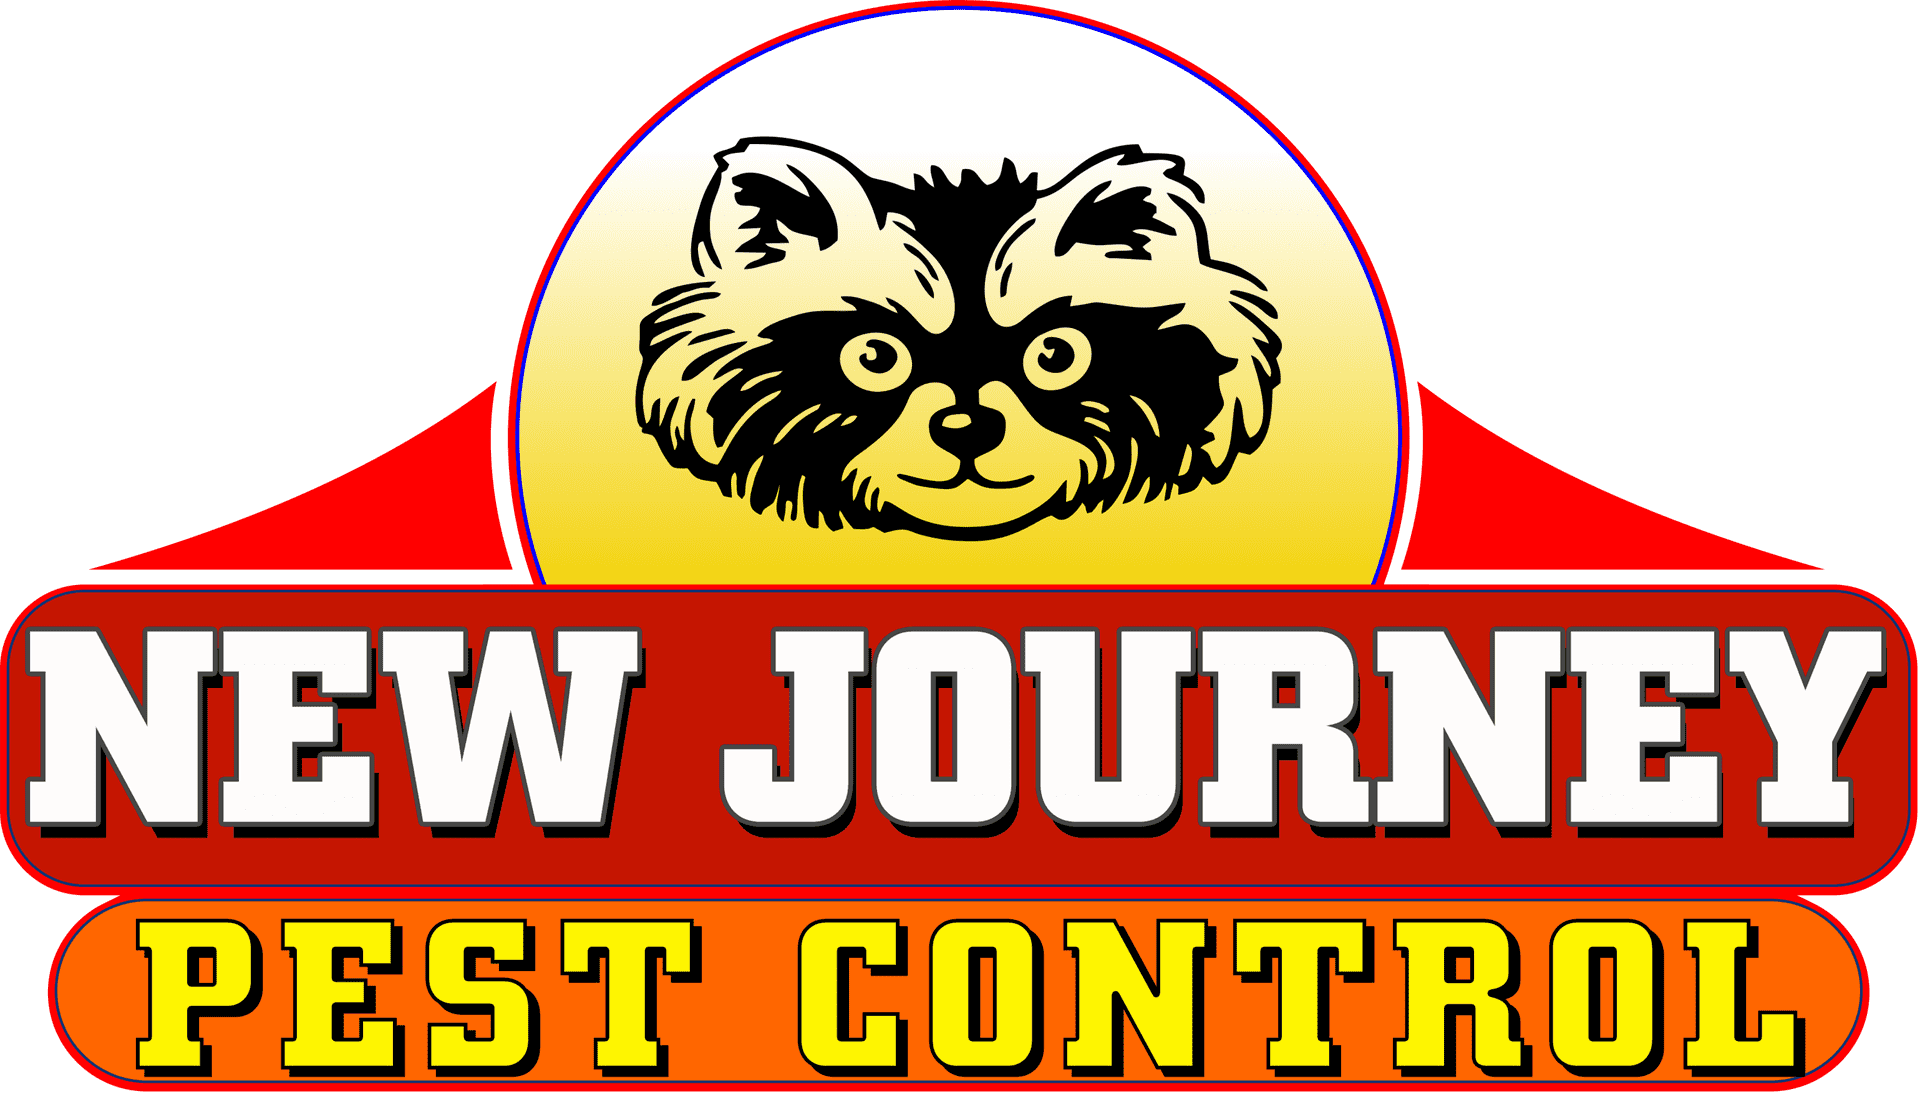 New Jersey Wildlife & Pest Control